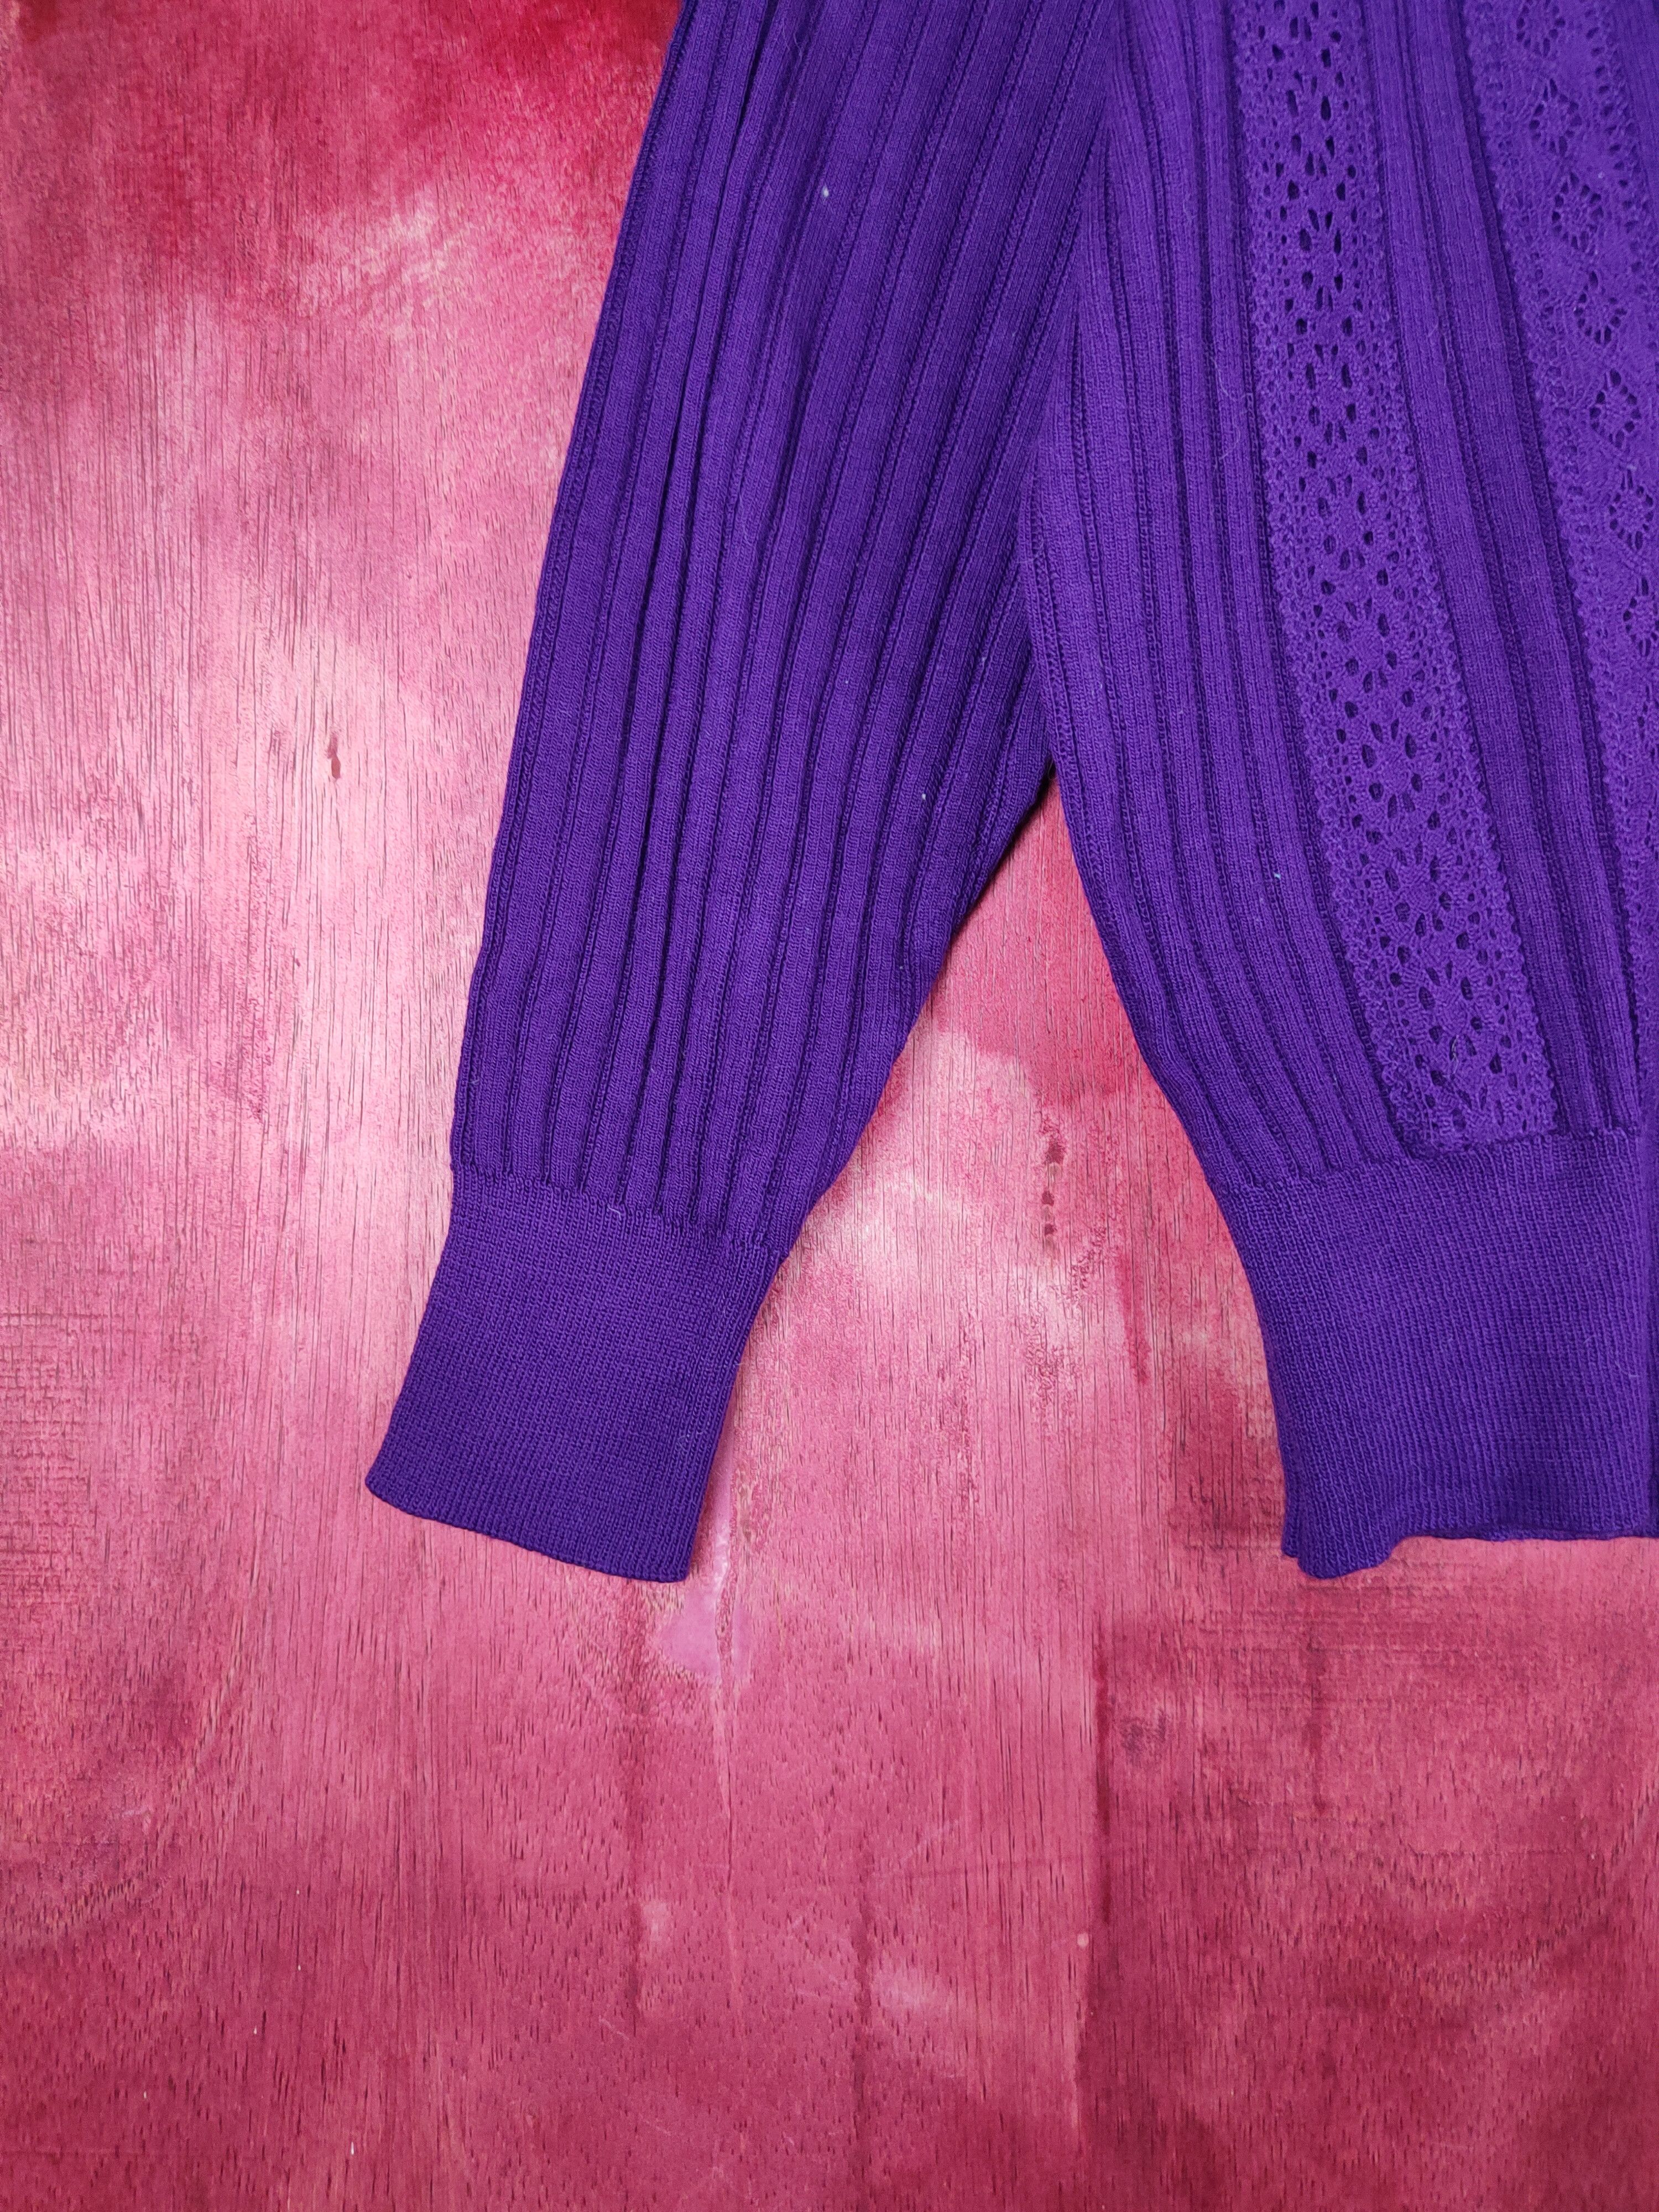 Japanese Brand Kosugi Purple Knitwear Cardigan Crop Tops Size L / US 10 / IT 46 - 4 Thumbnail